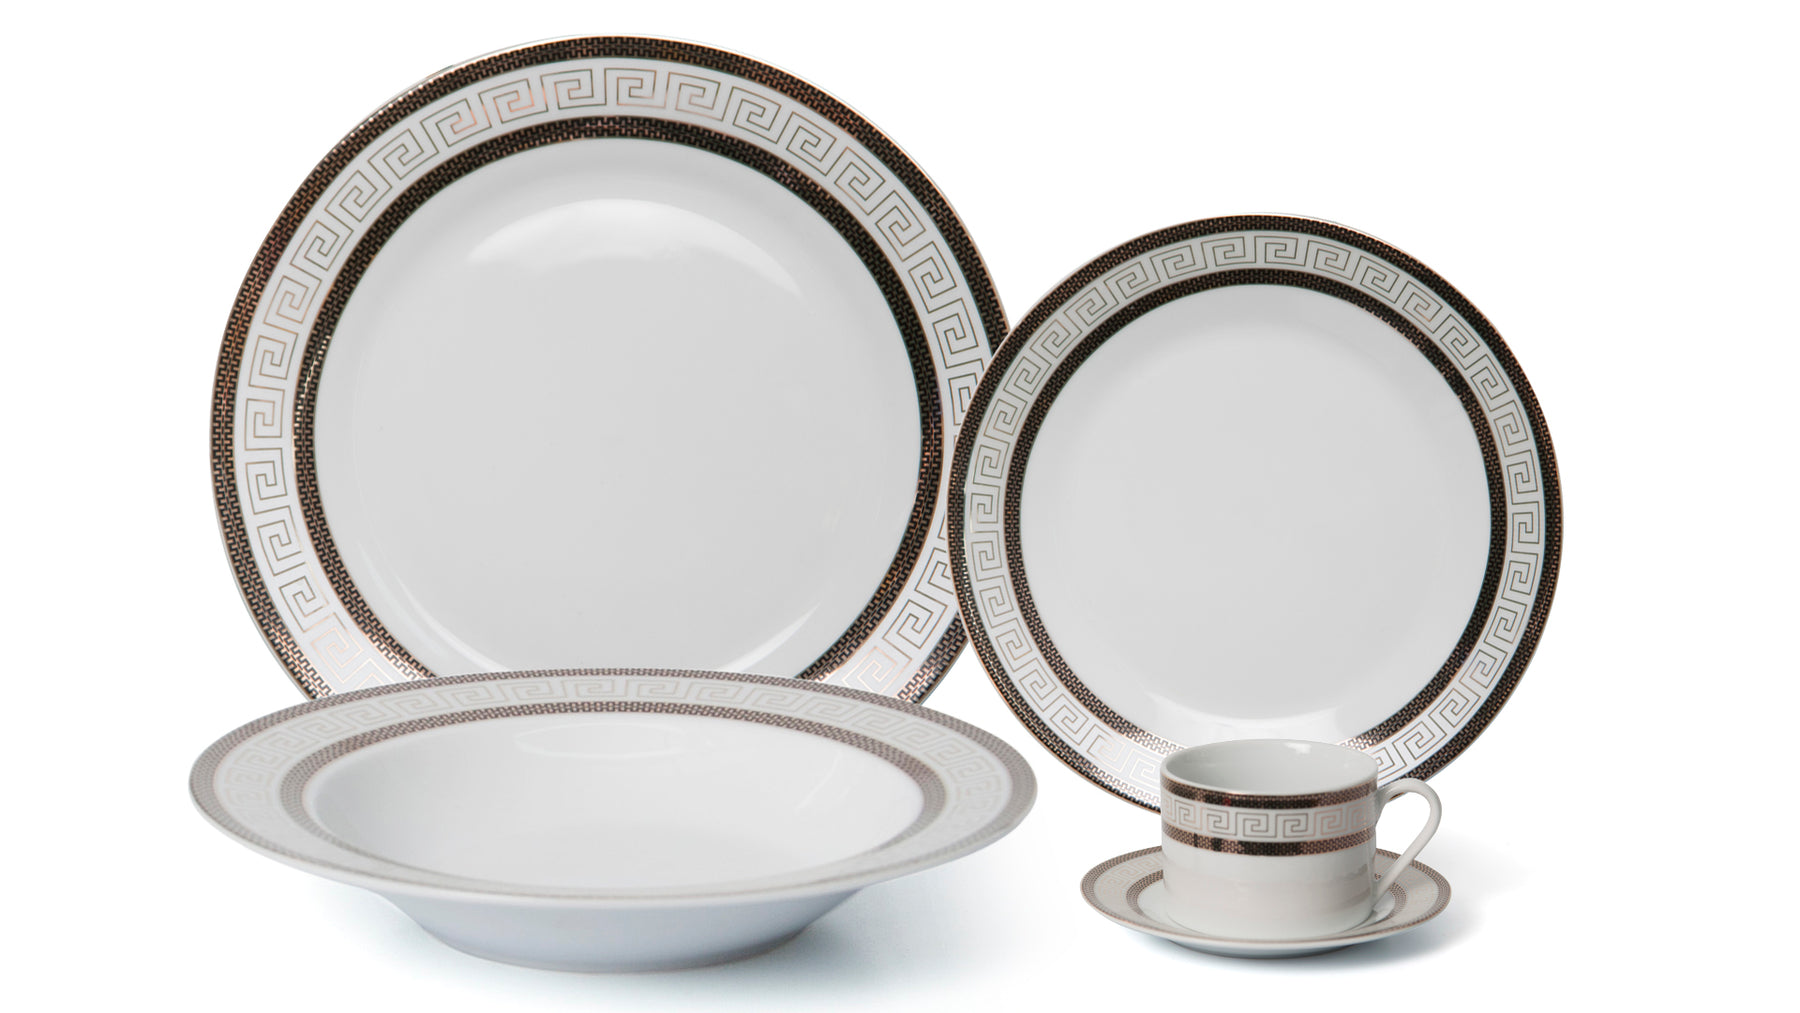 Joseph Sedgh Collection 20 Piece Porcelain Dinnerware  Set, Versace Design Venetian Gold - Service for 4 (Big Plate, Small Plate, Bowl, Teacup+Saucer)